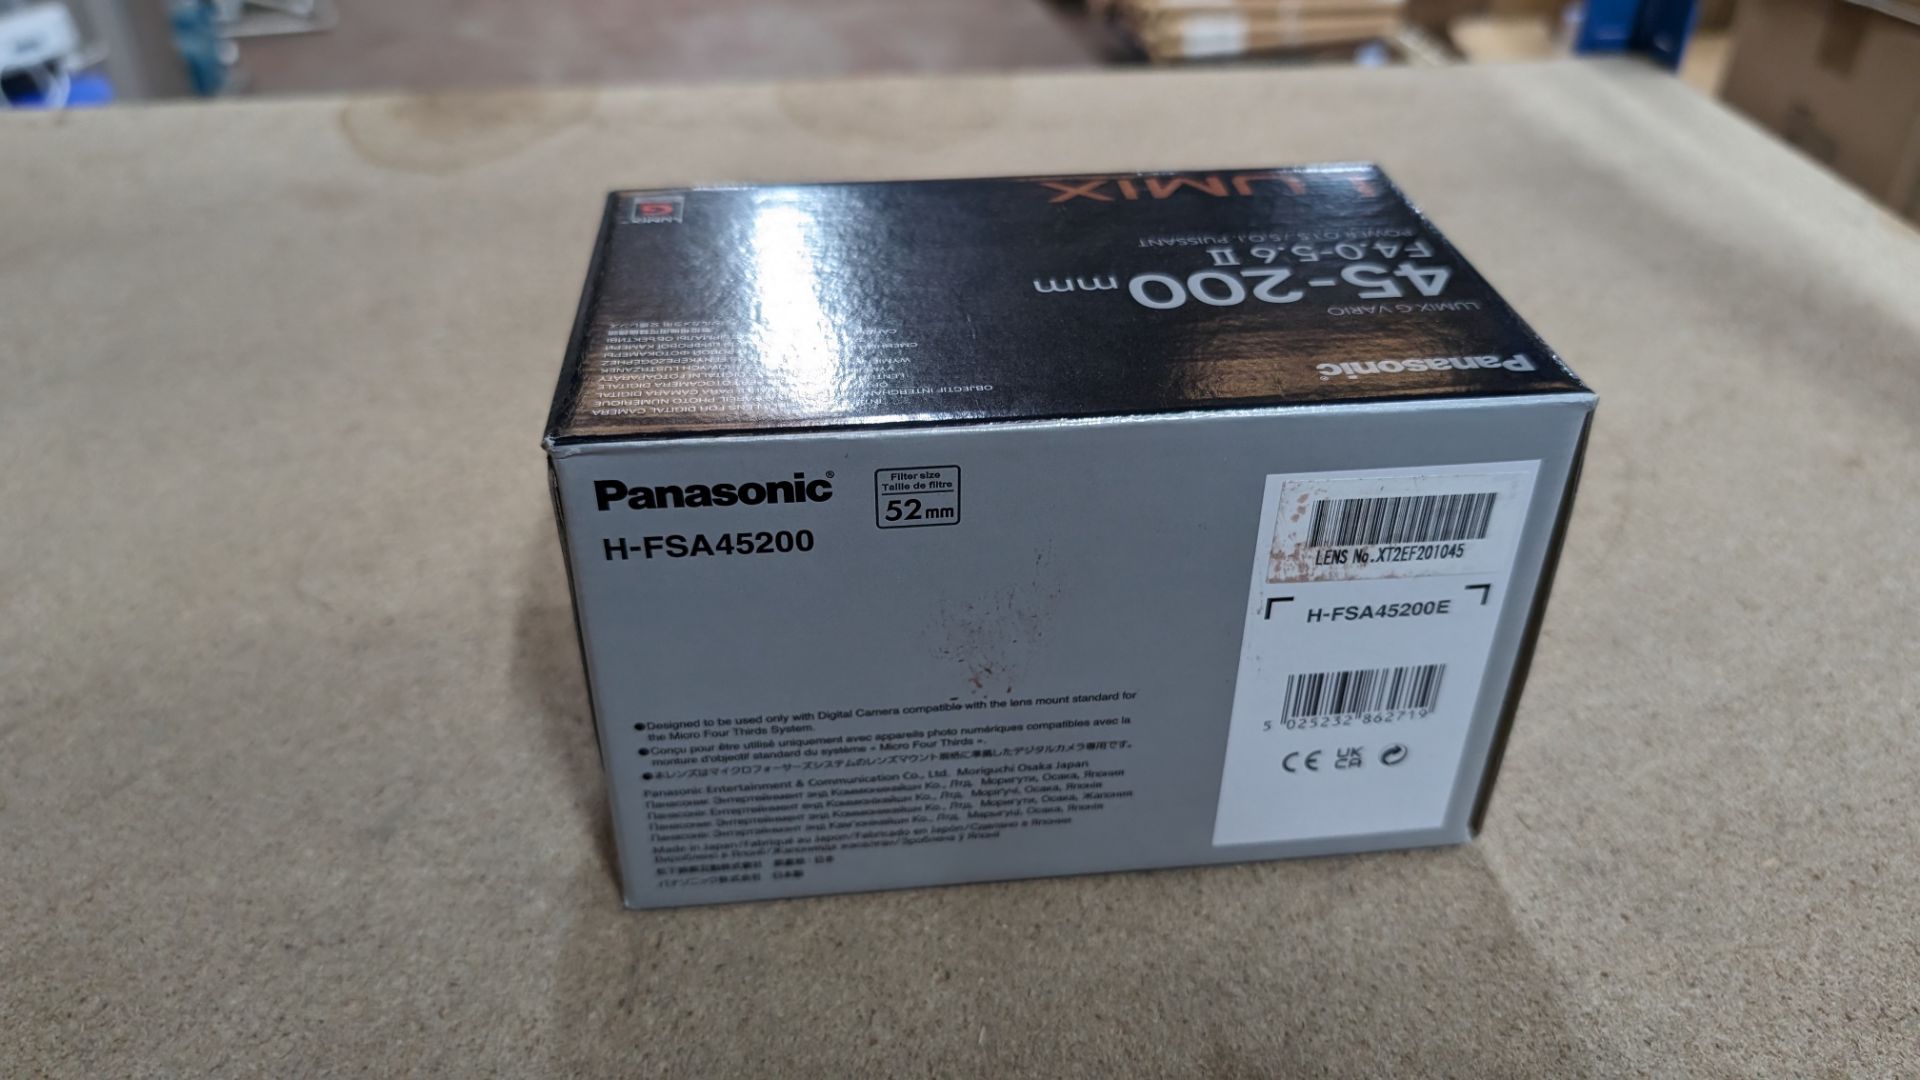 Panasonic Lumix G Vario 45-200mm lens, model H-FSA45200, f4.0-5.6 II - Image 5 of 5